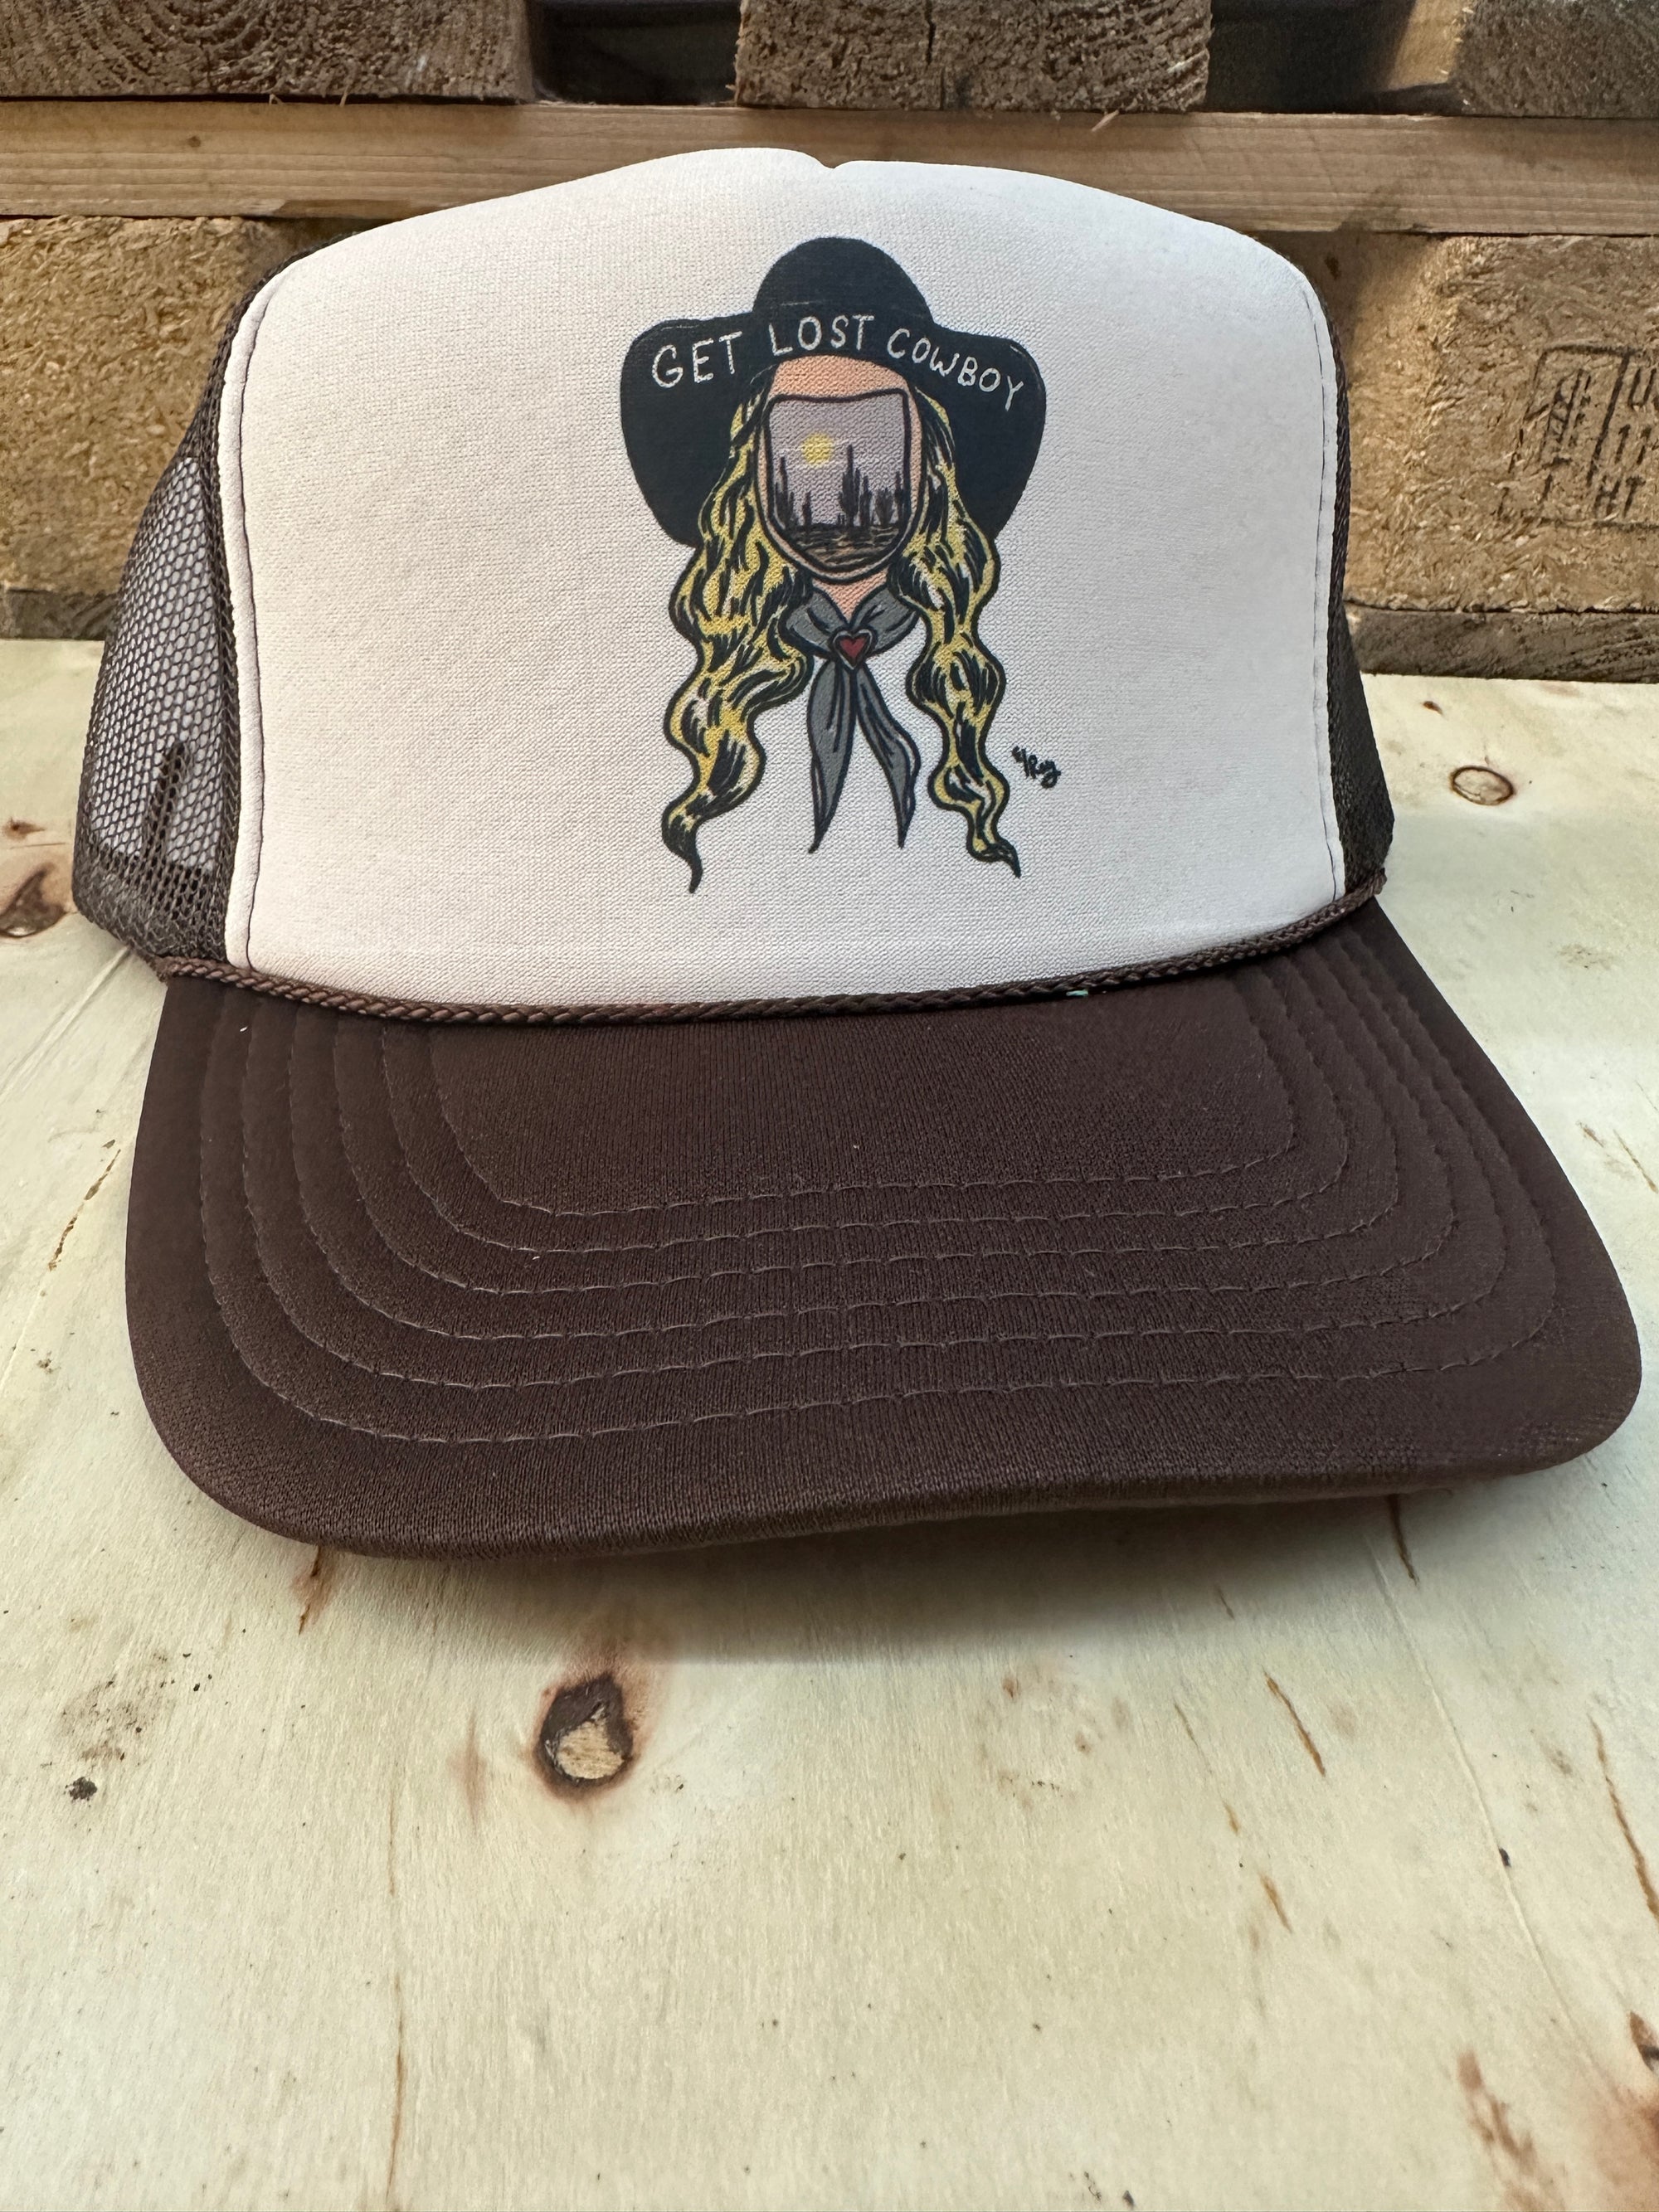 Get Lost Cowboy Snap Back Trucker Hats